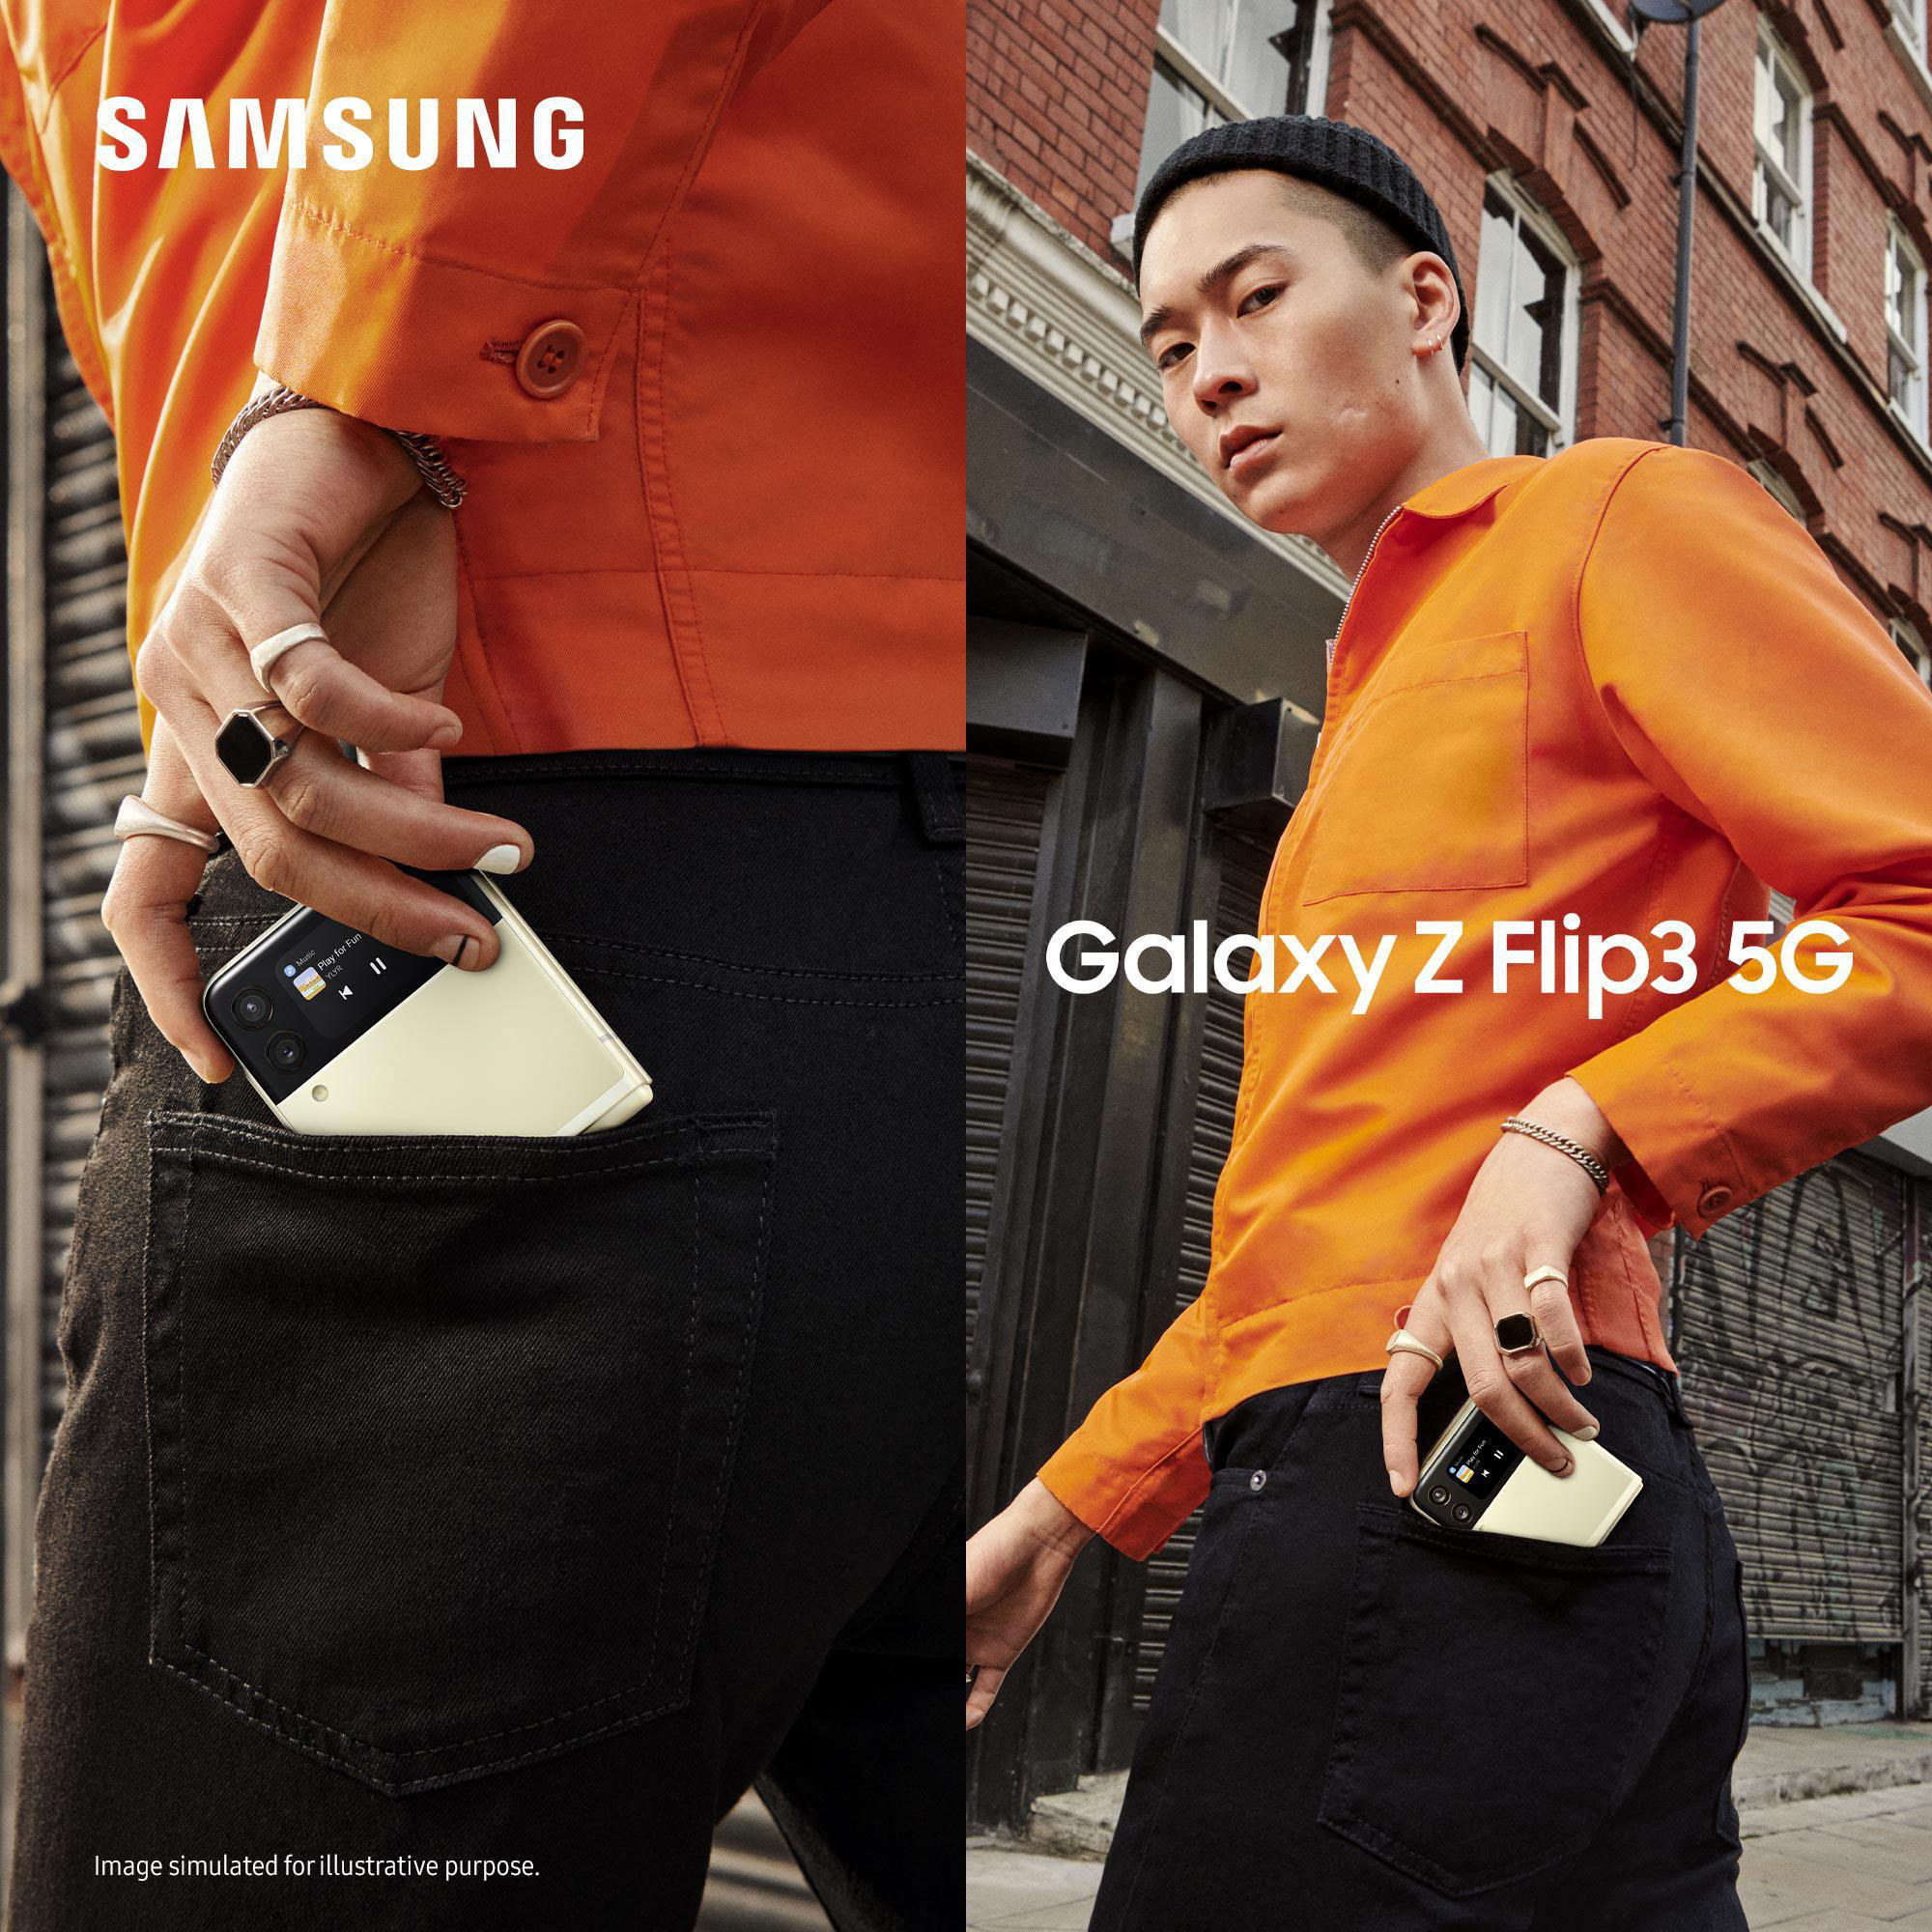 5G Galaxy 256 Flip3 SAMSUNG Z Phantom GB SIM Green Dual